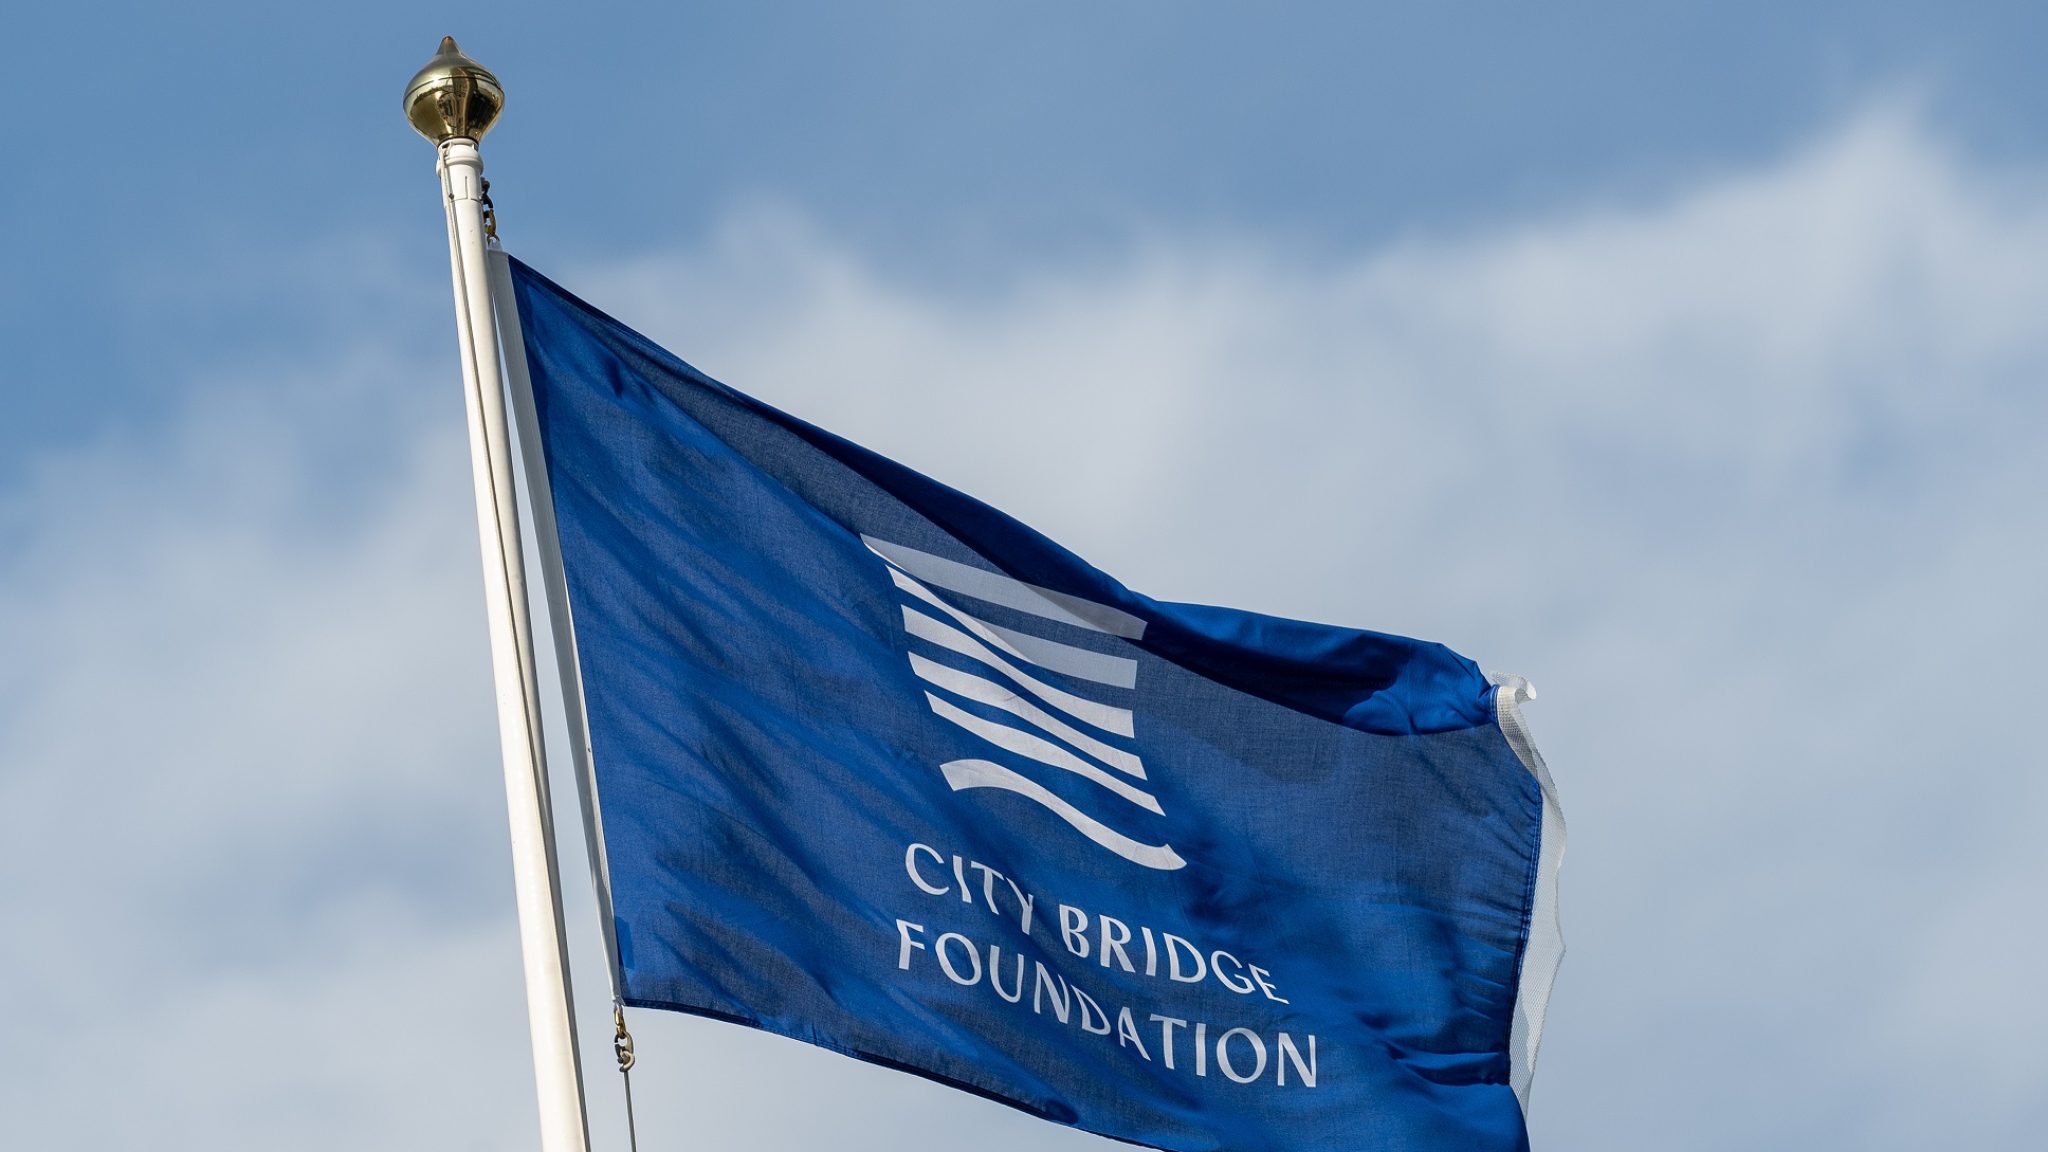 The new City Bridge Foundation flag flies over Tower Bridge